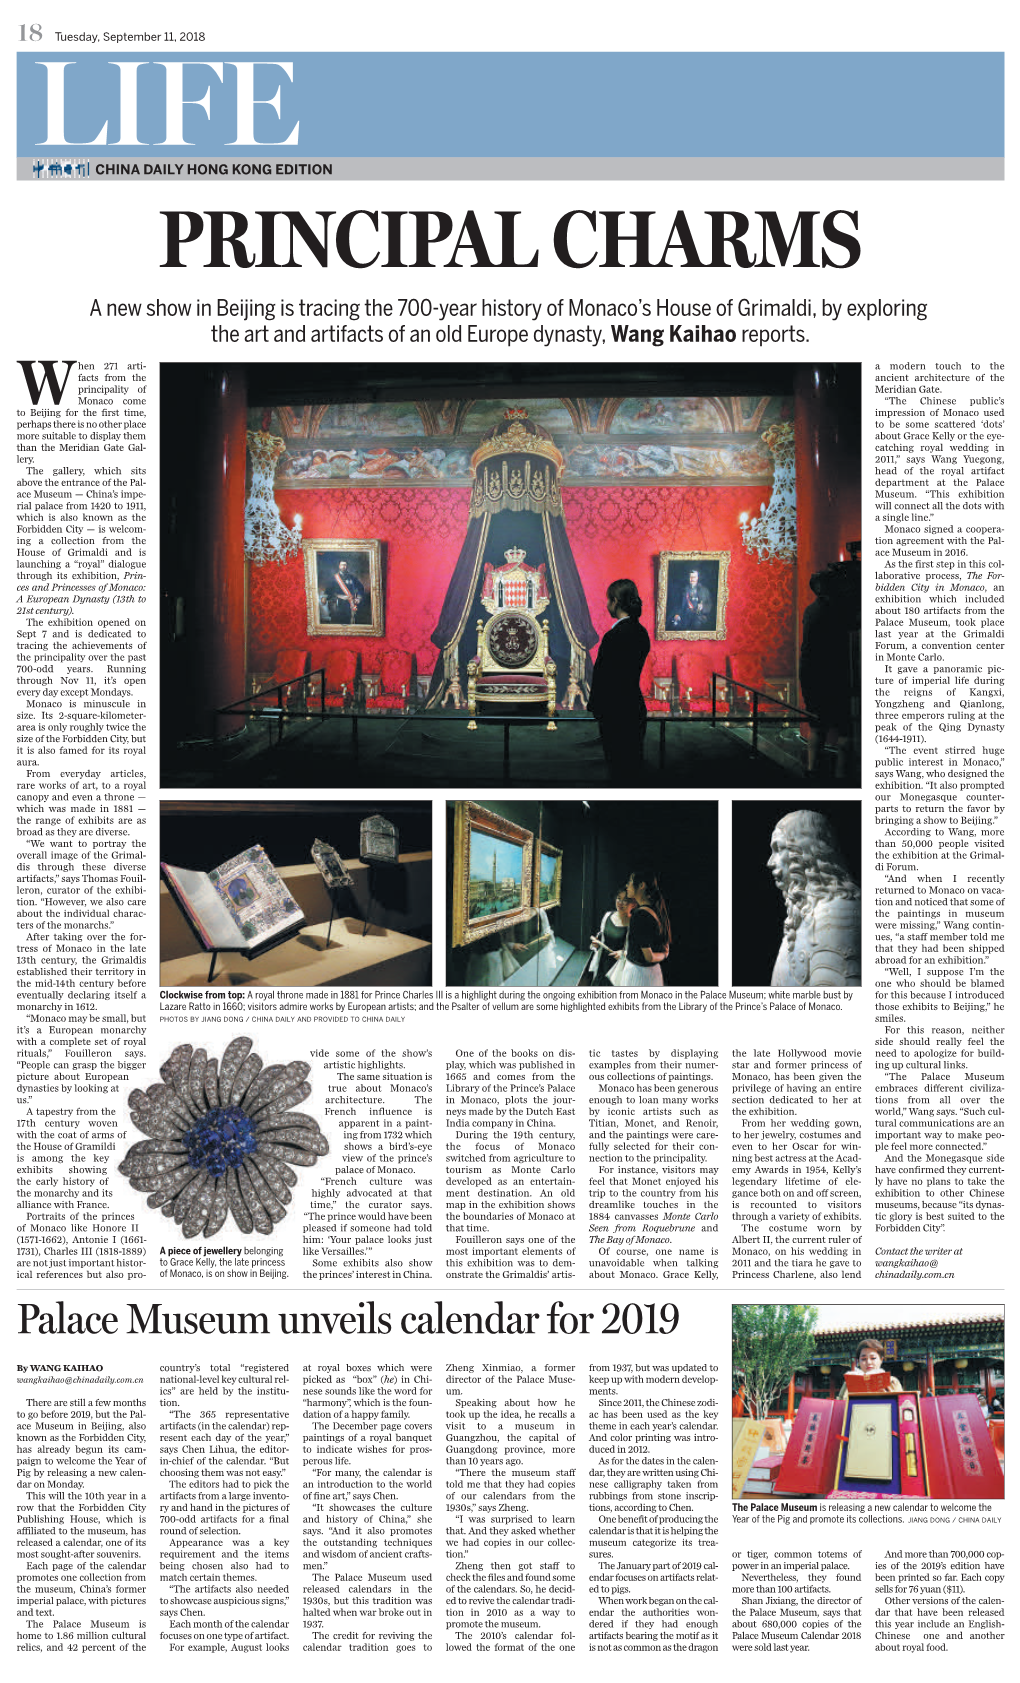 Palace Museum Unveils Calendar for 2019